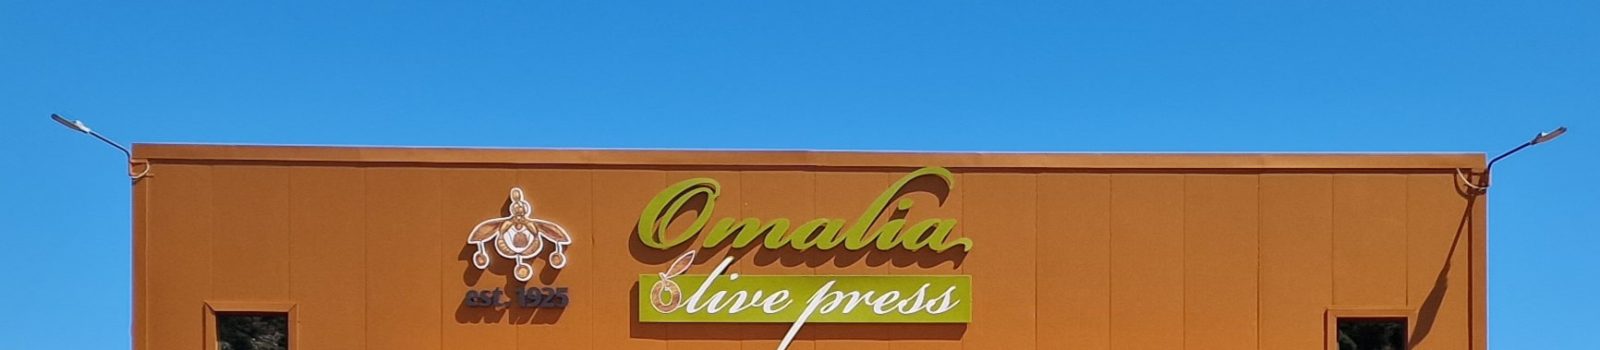 Omalia Olive Press auf Kreta